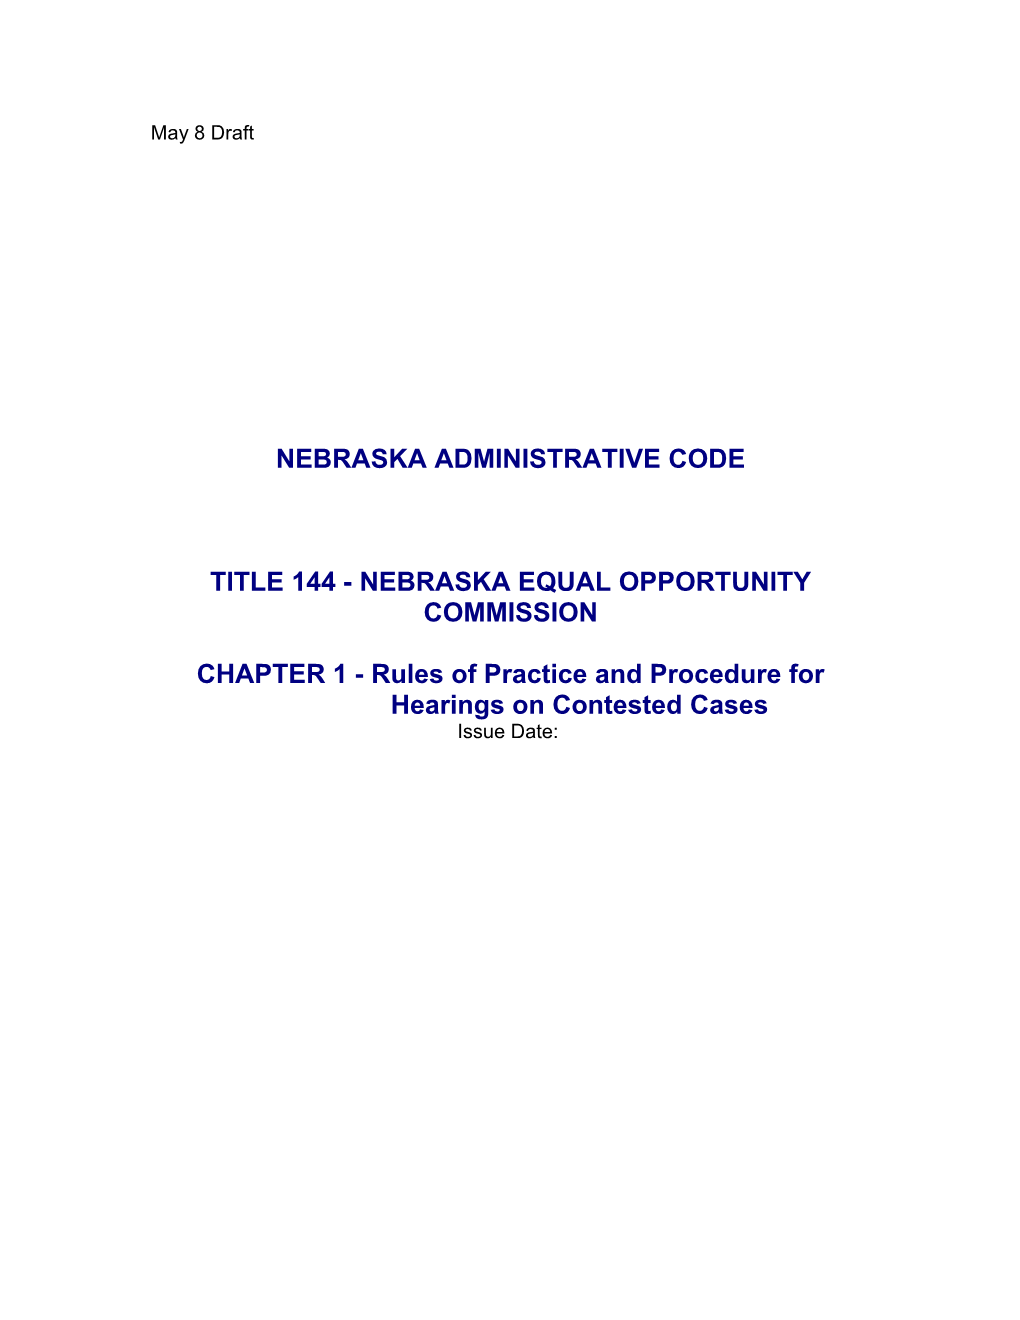 Nebraska Administrative Code s3